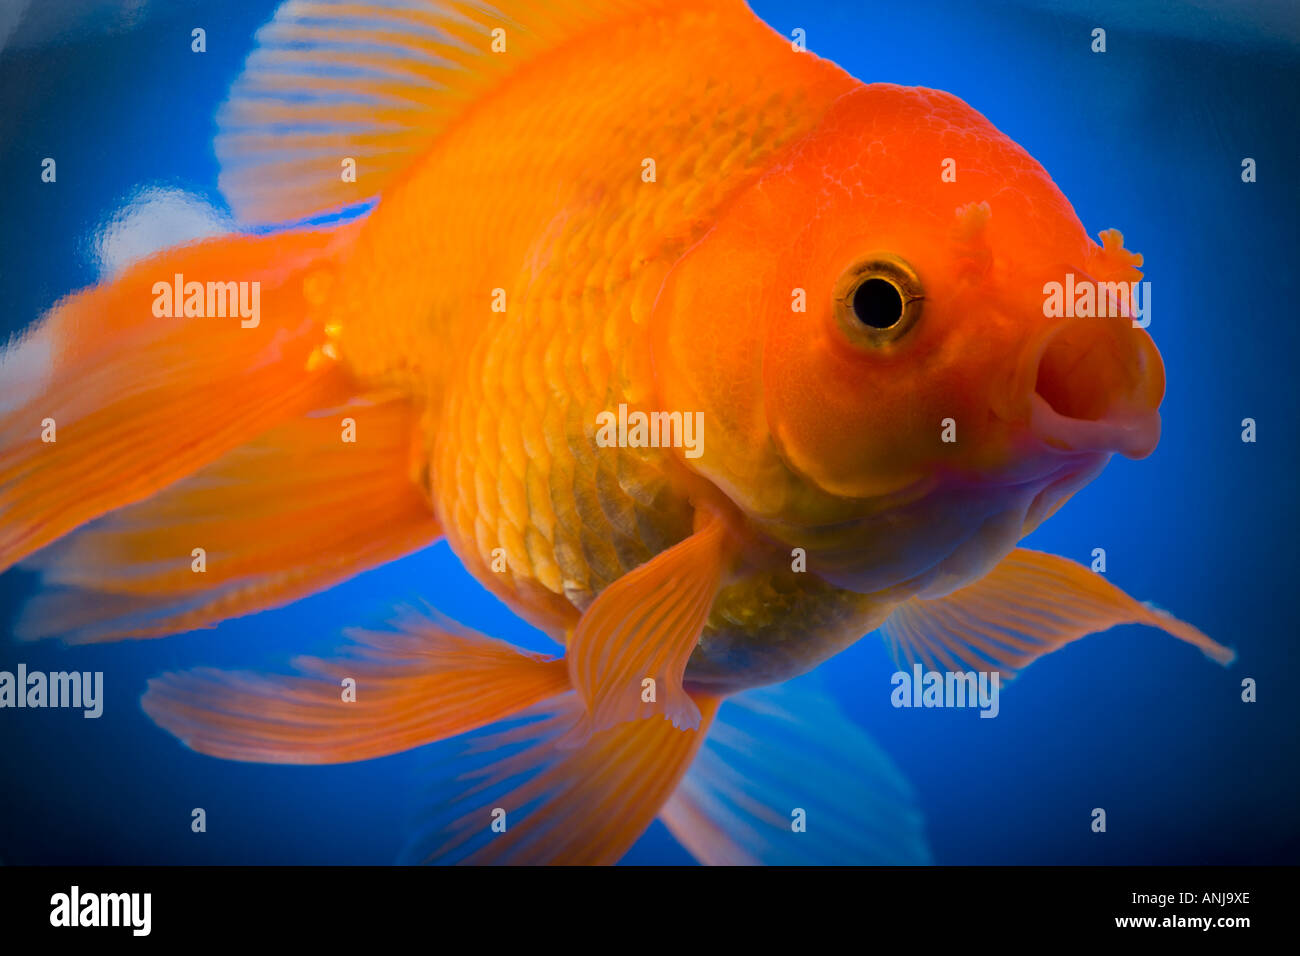 Detailed view of goldfish Stock Photo